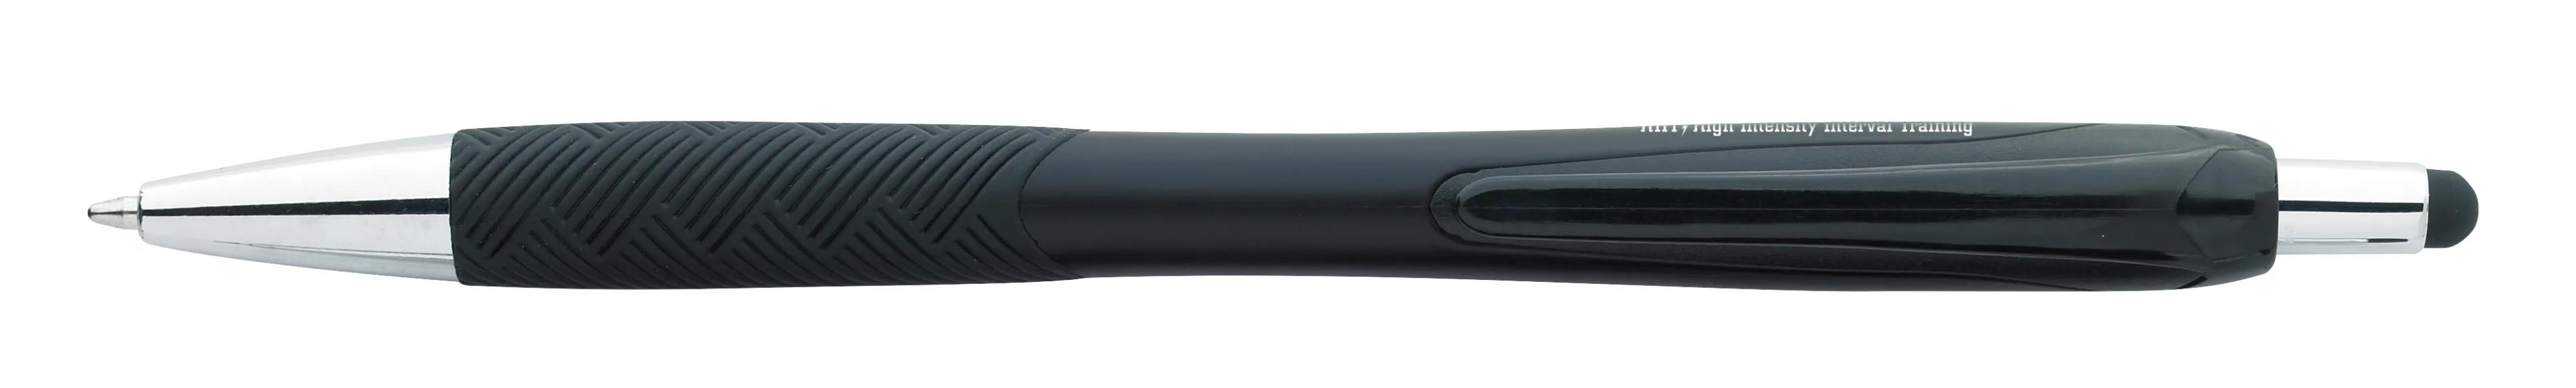 Metallic Pattern Grip Stylus Pen 23 of 37